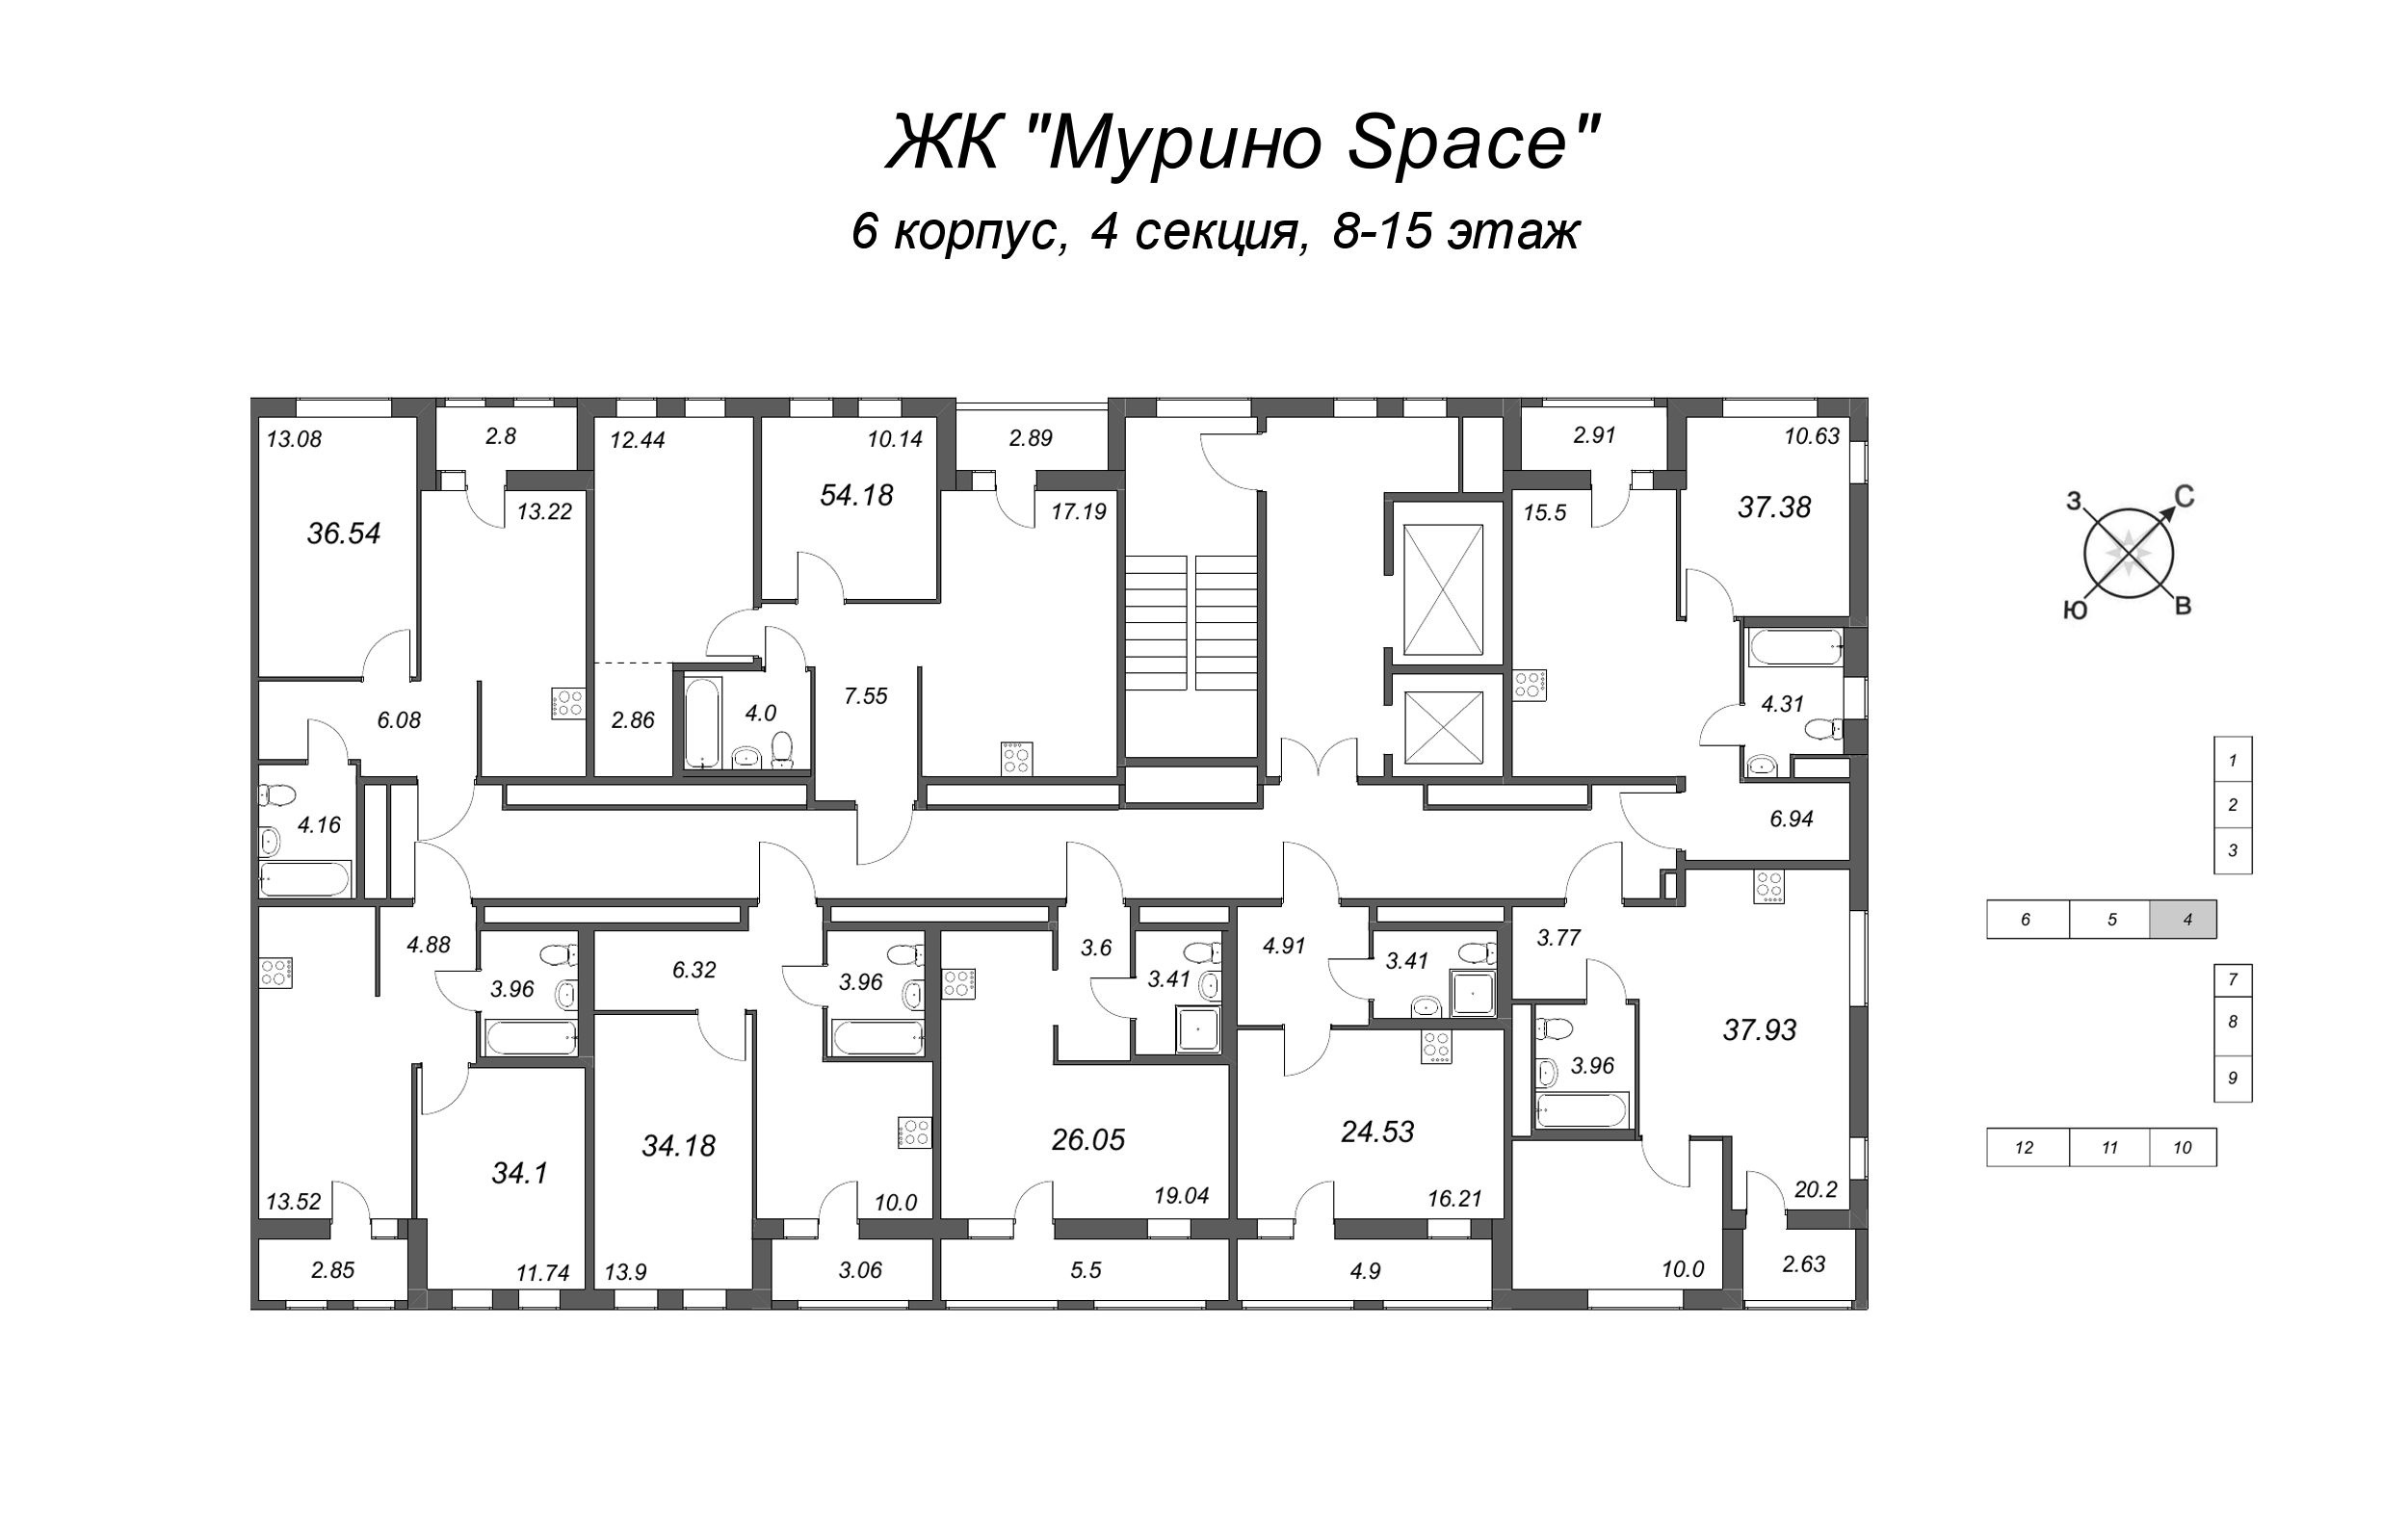 2-комнатная (Евро) квартира, 37.38 м² - планировка этажа